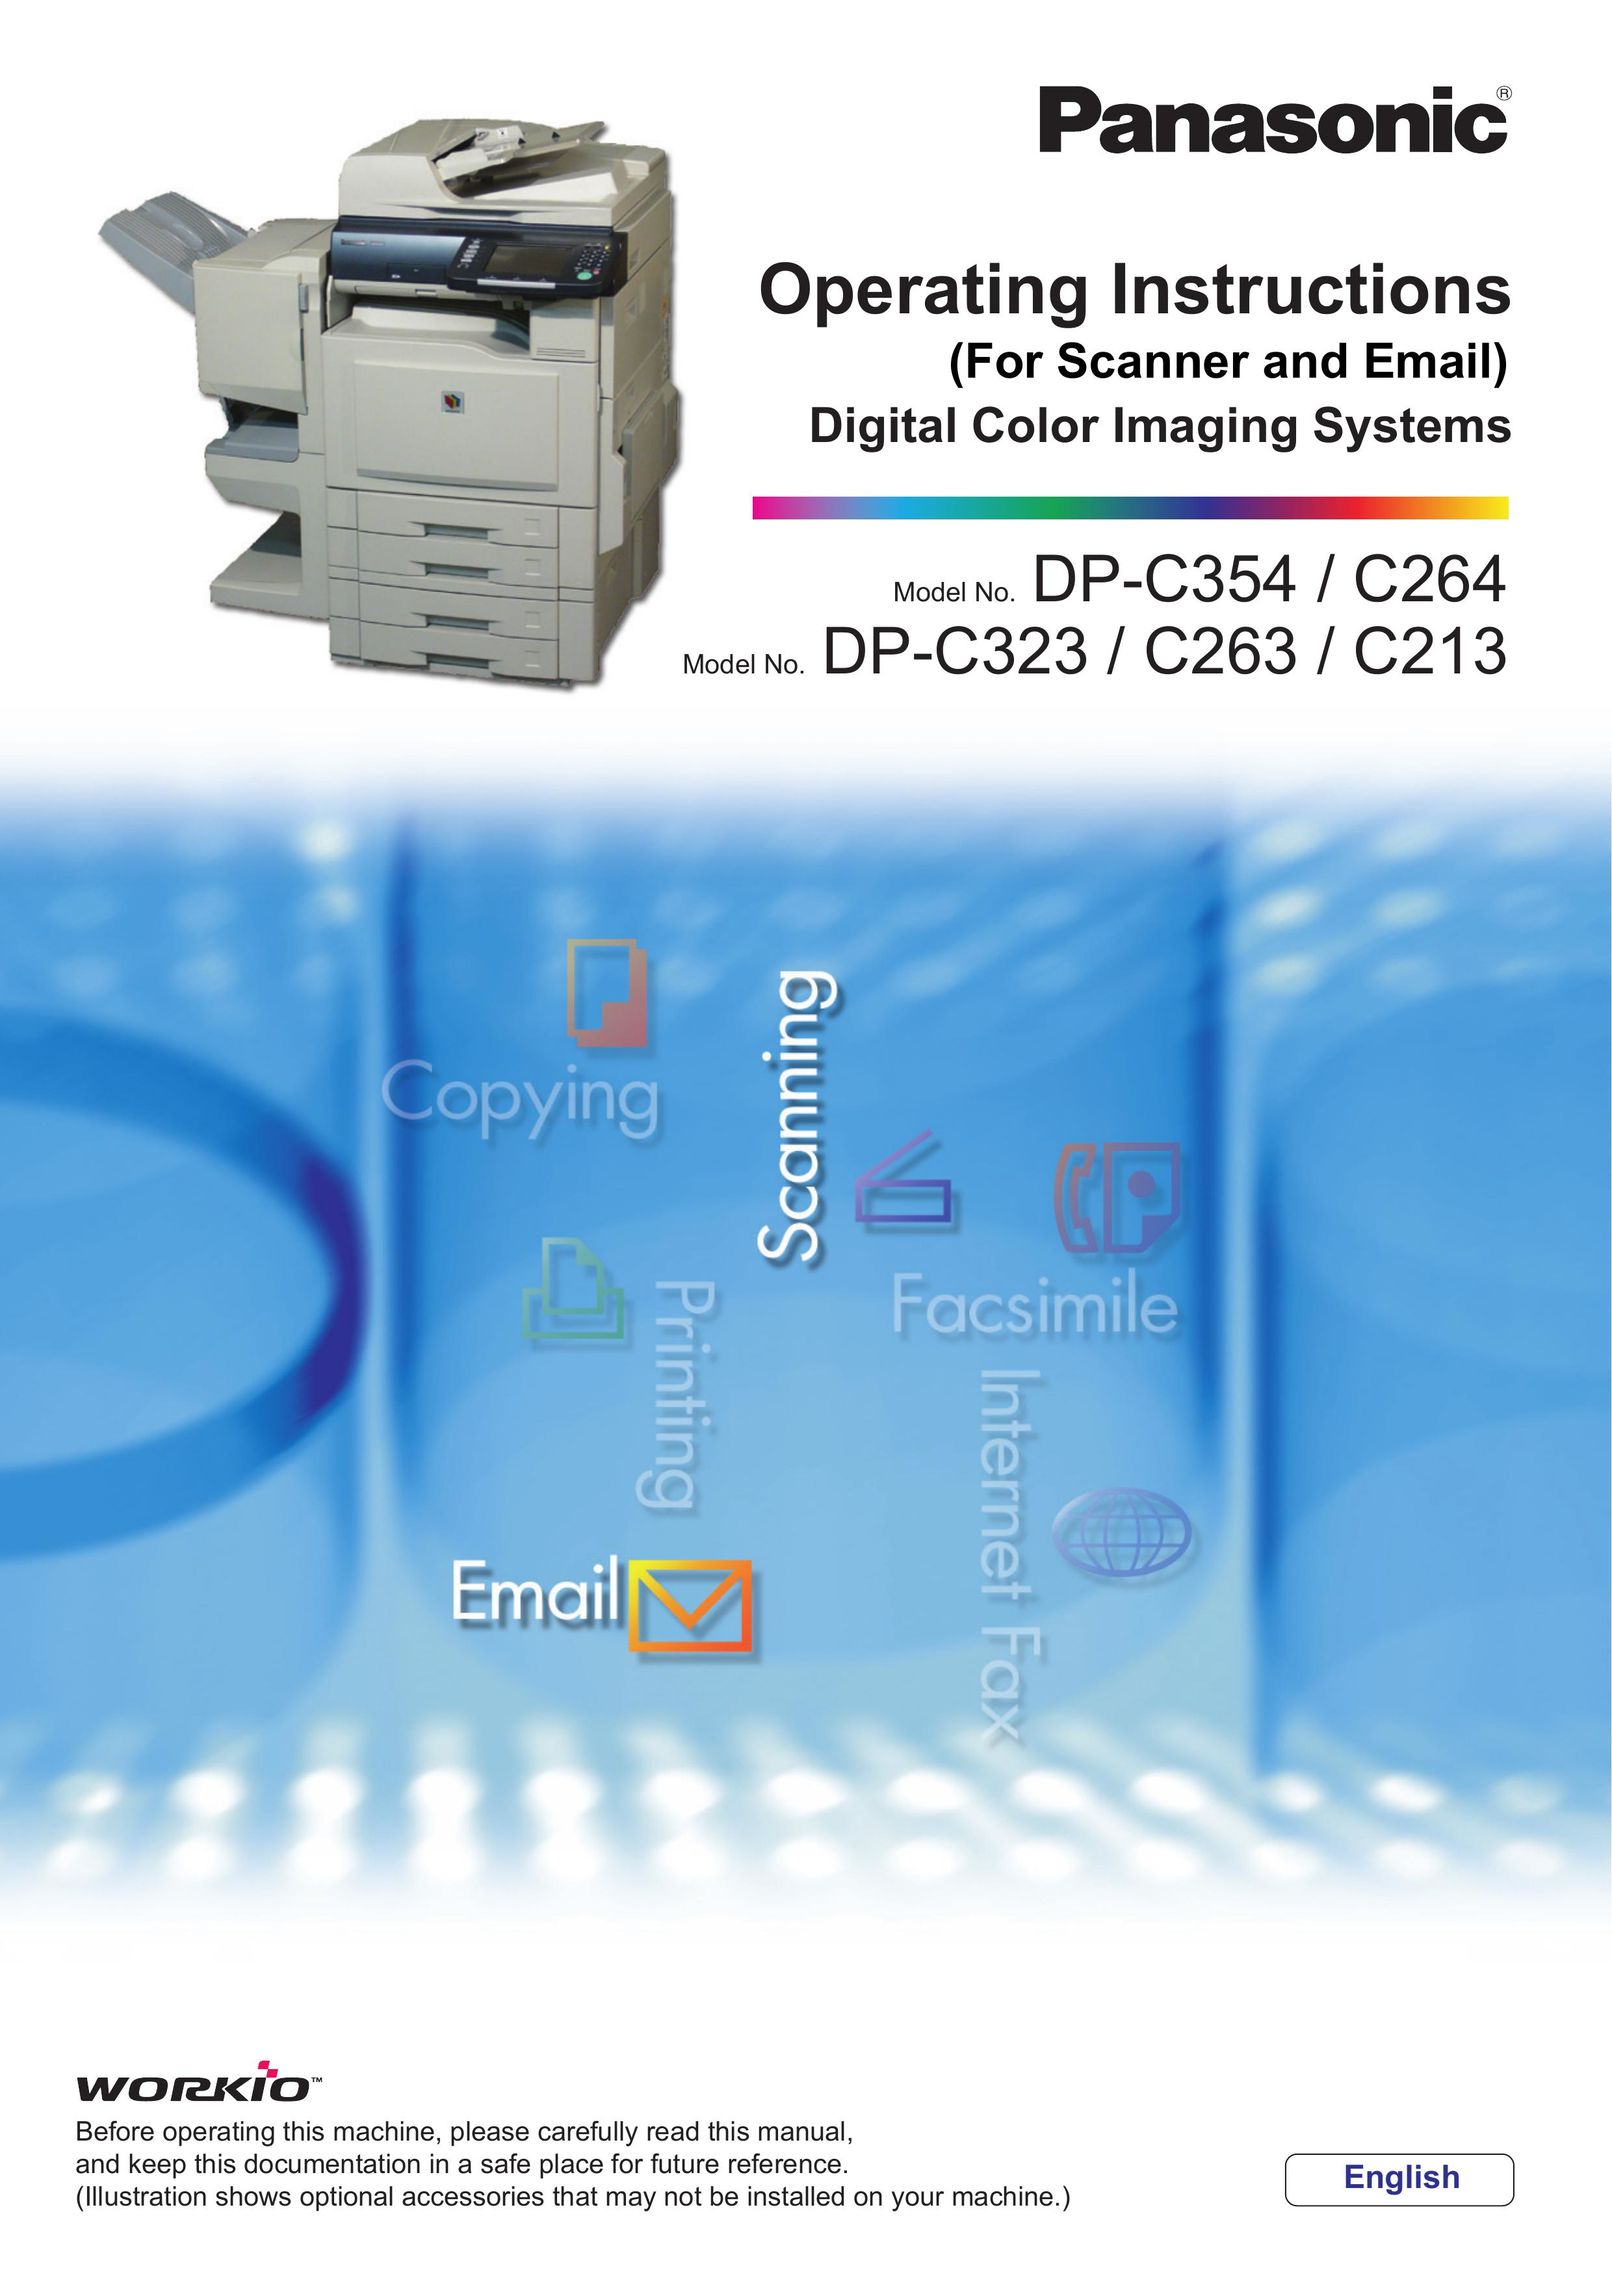 Panasonic DP-C323 Scanner User Manual